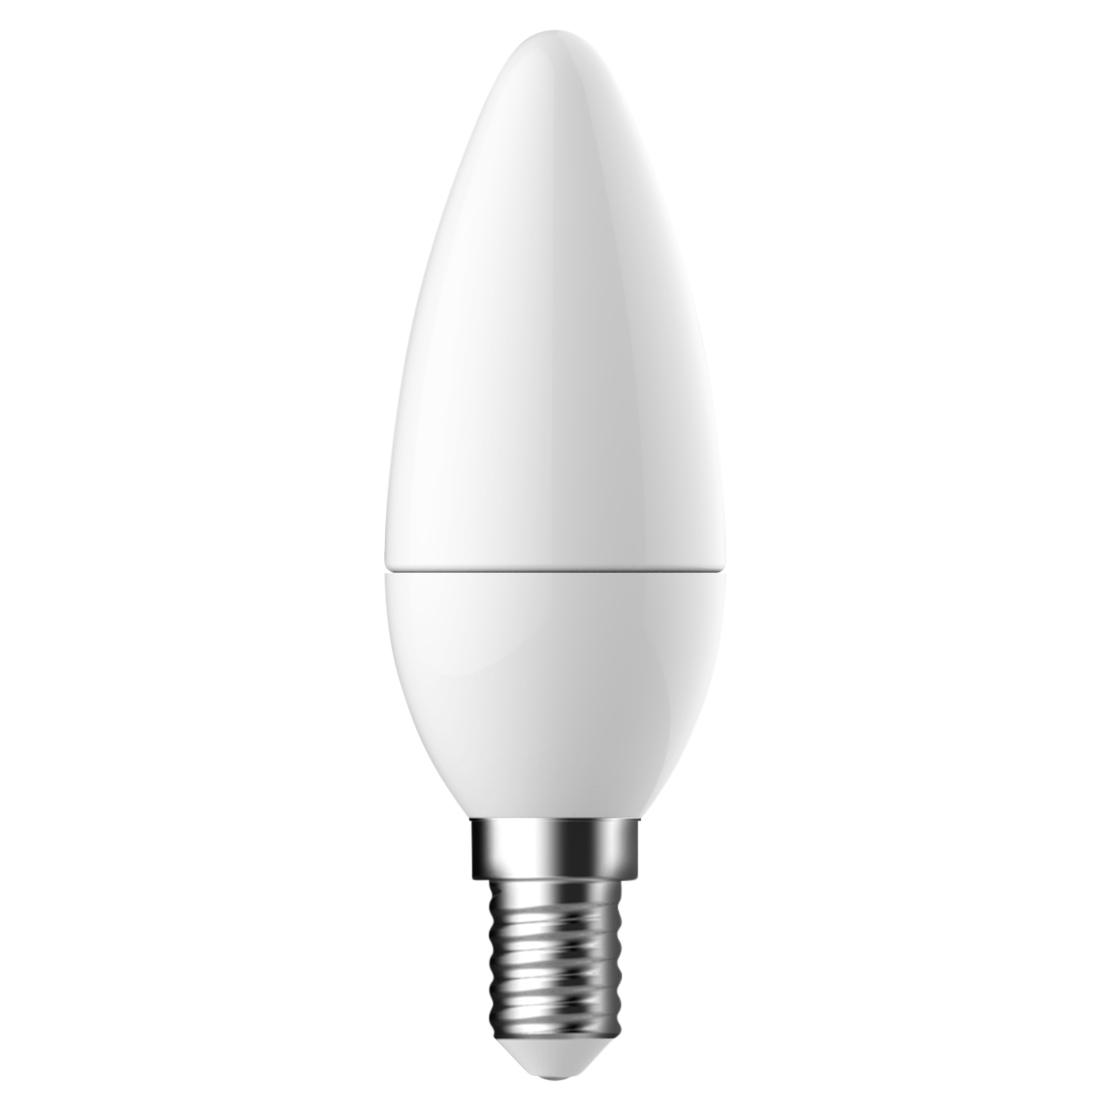 Nordlux Energetic LED Leuchtmittel E14 C35 weiß 470lm 2700K 5,8W 80Ra 300° 3,5x3,5x10cm von Energetic